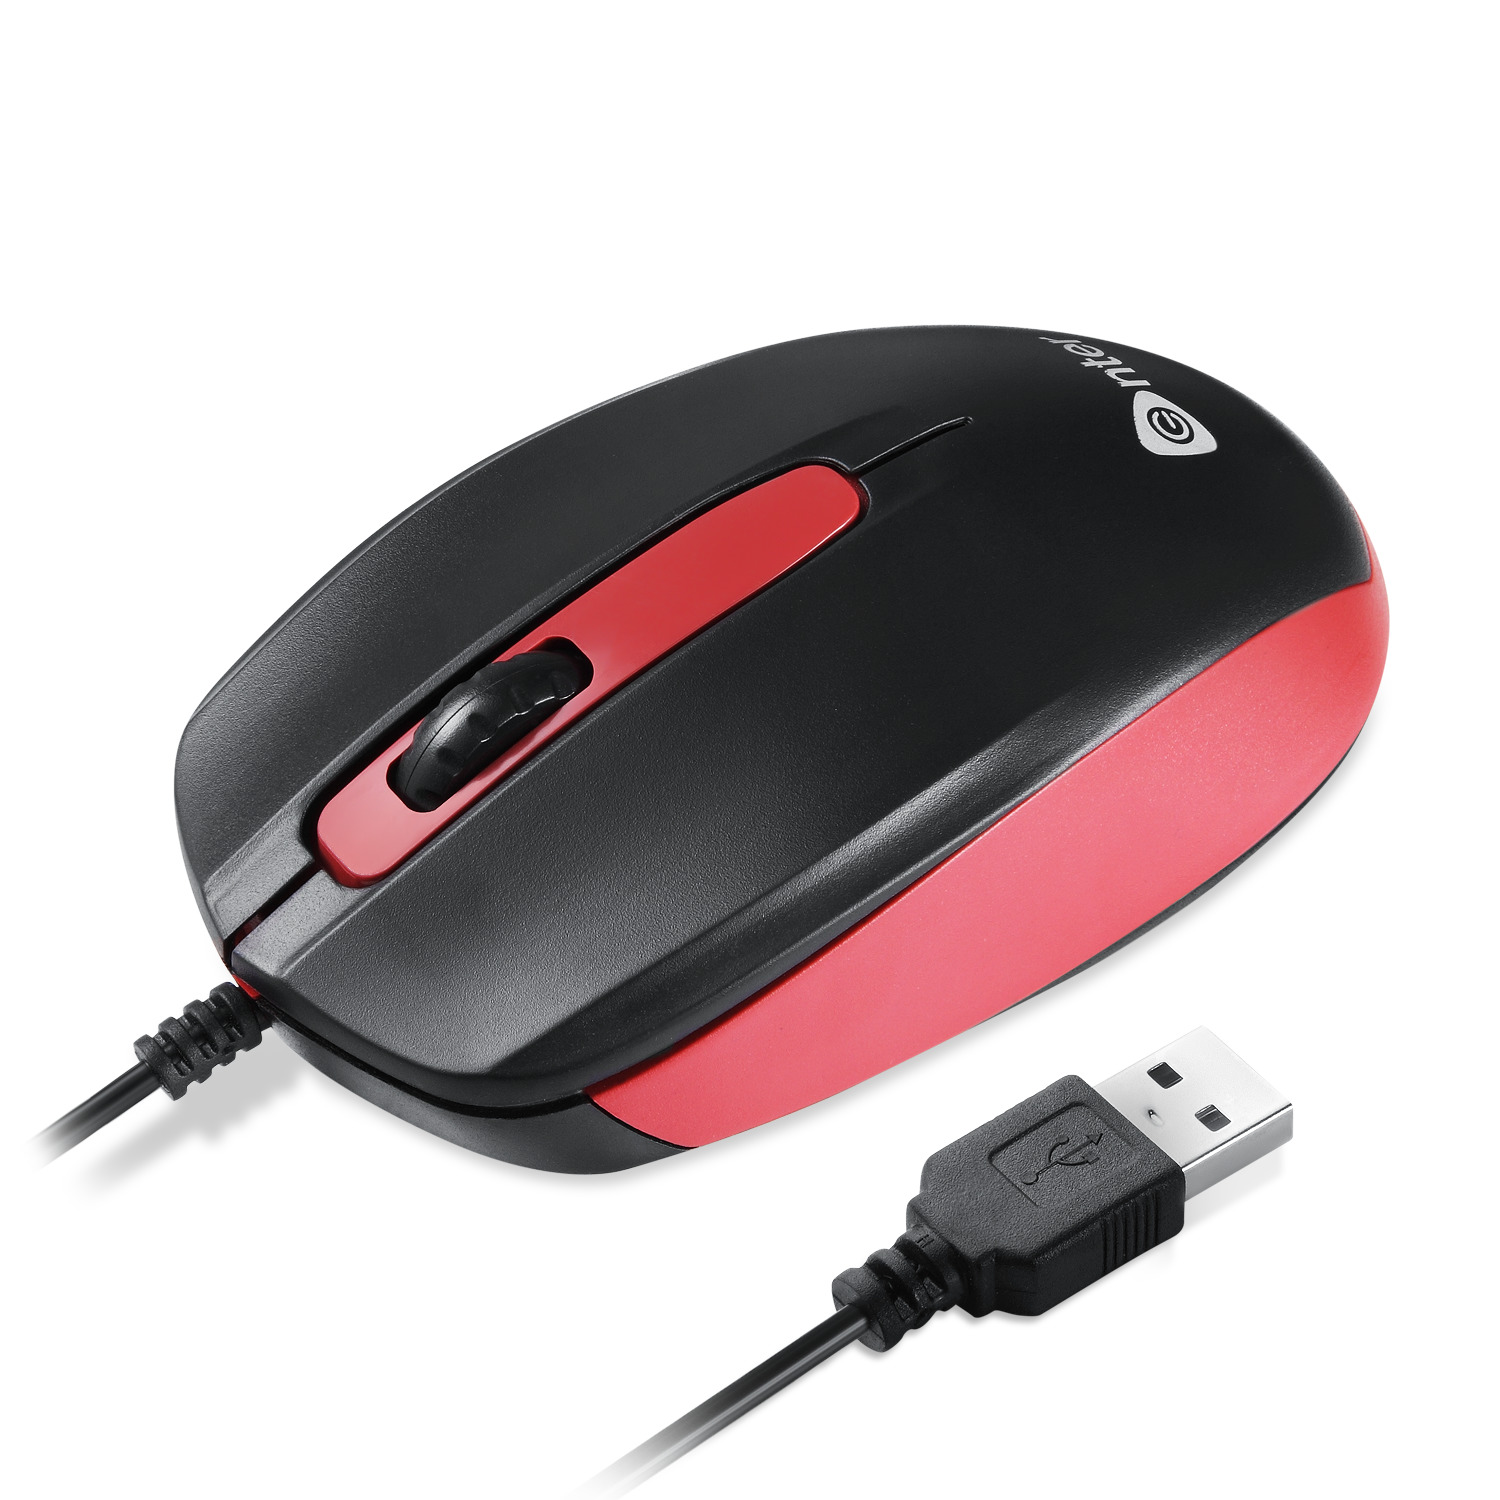 E mouse. USB Optical Mouse. Not Optical Mouse.